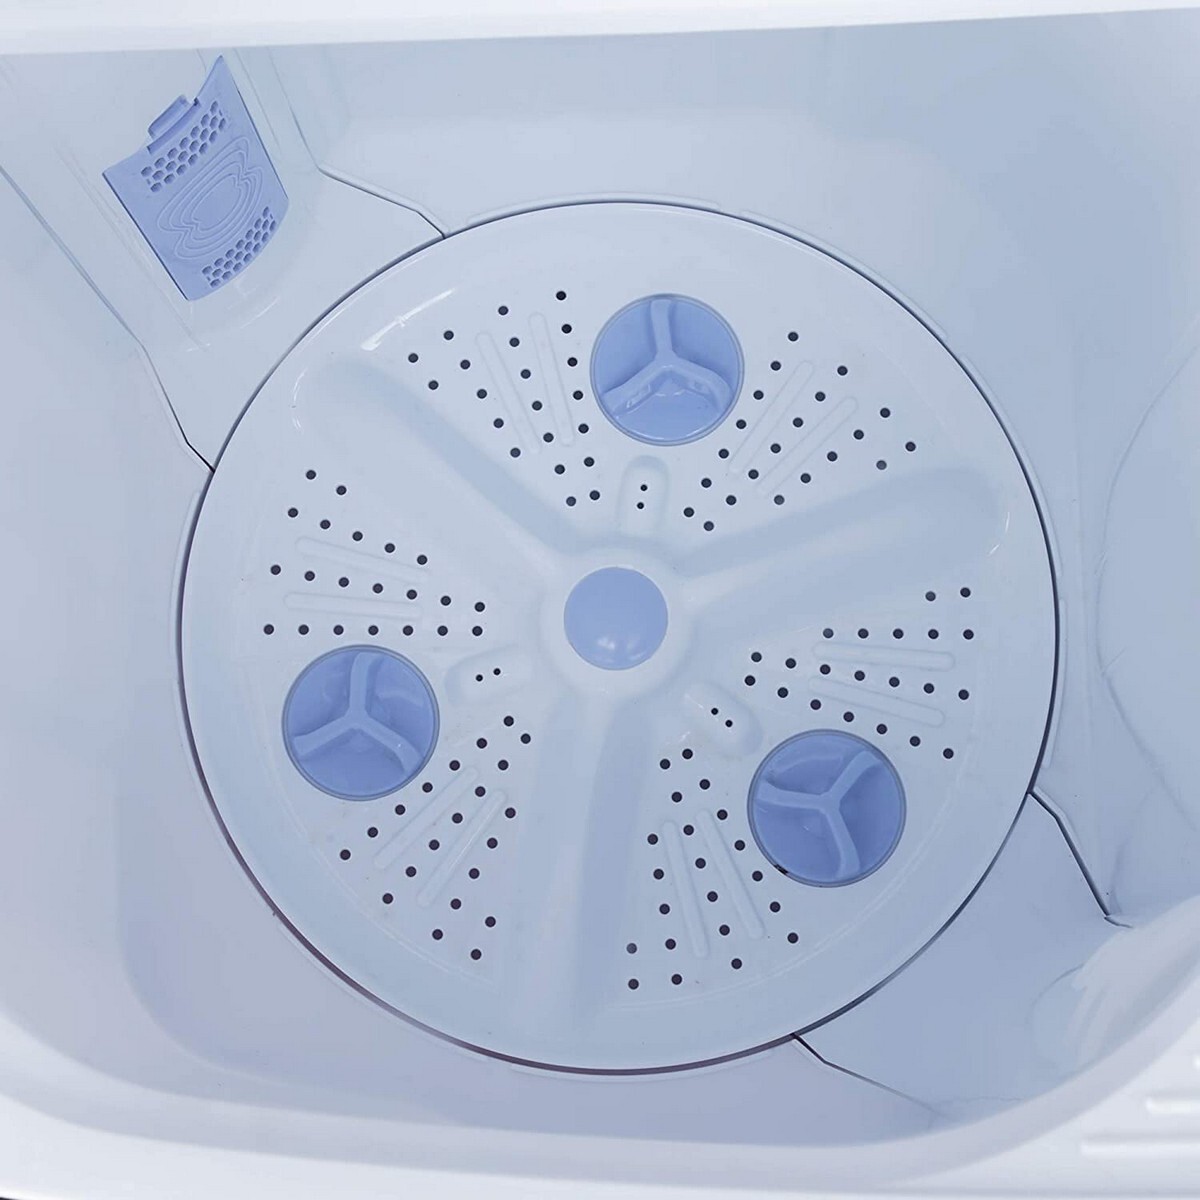 Godrej 8 Kg Semi-Automatic Top Loading Washing Machine WSEDGE 8.0 TB3 M  Lavender